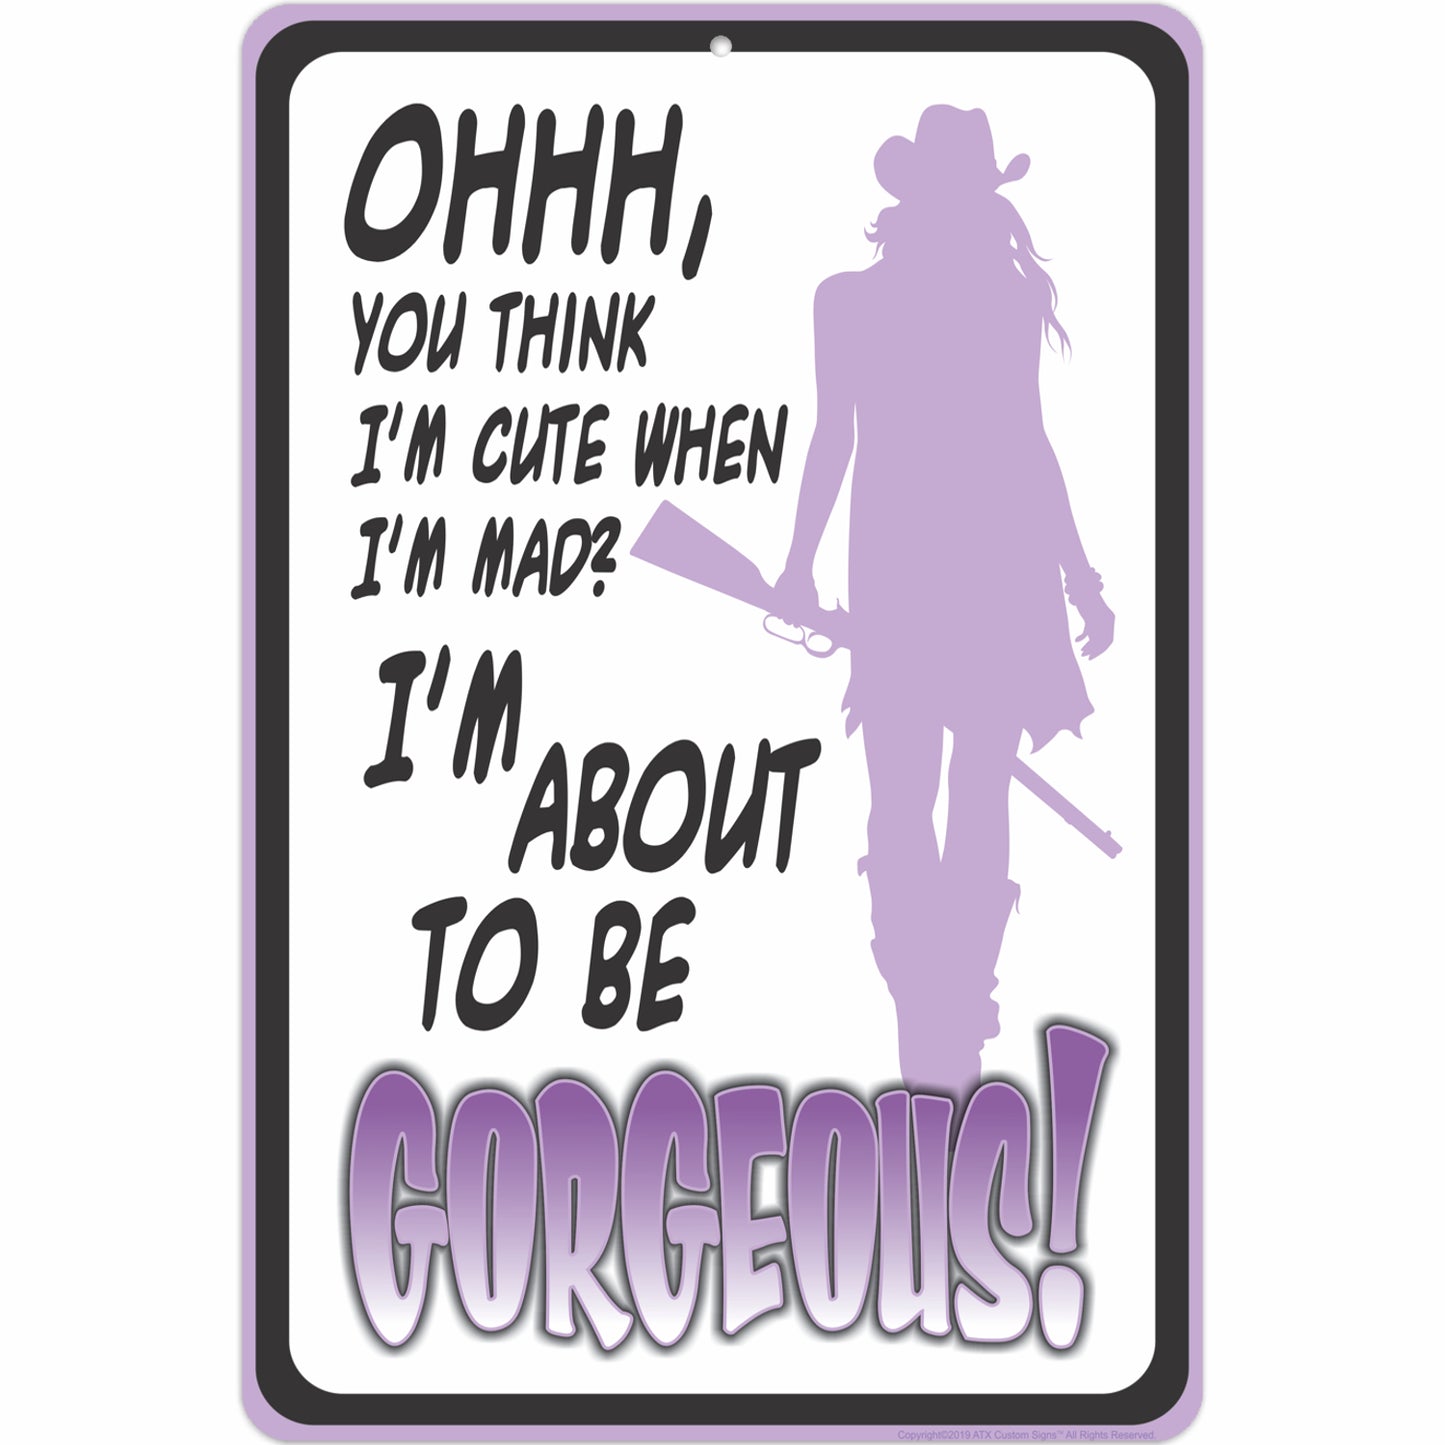 Ohhh, You Think I'm Cute When I'm mad? I'm About to be Gorgeous! (Purple)